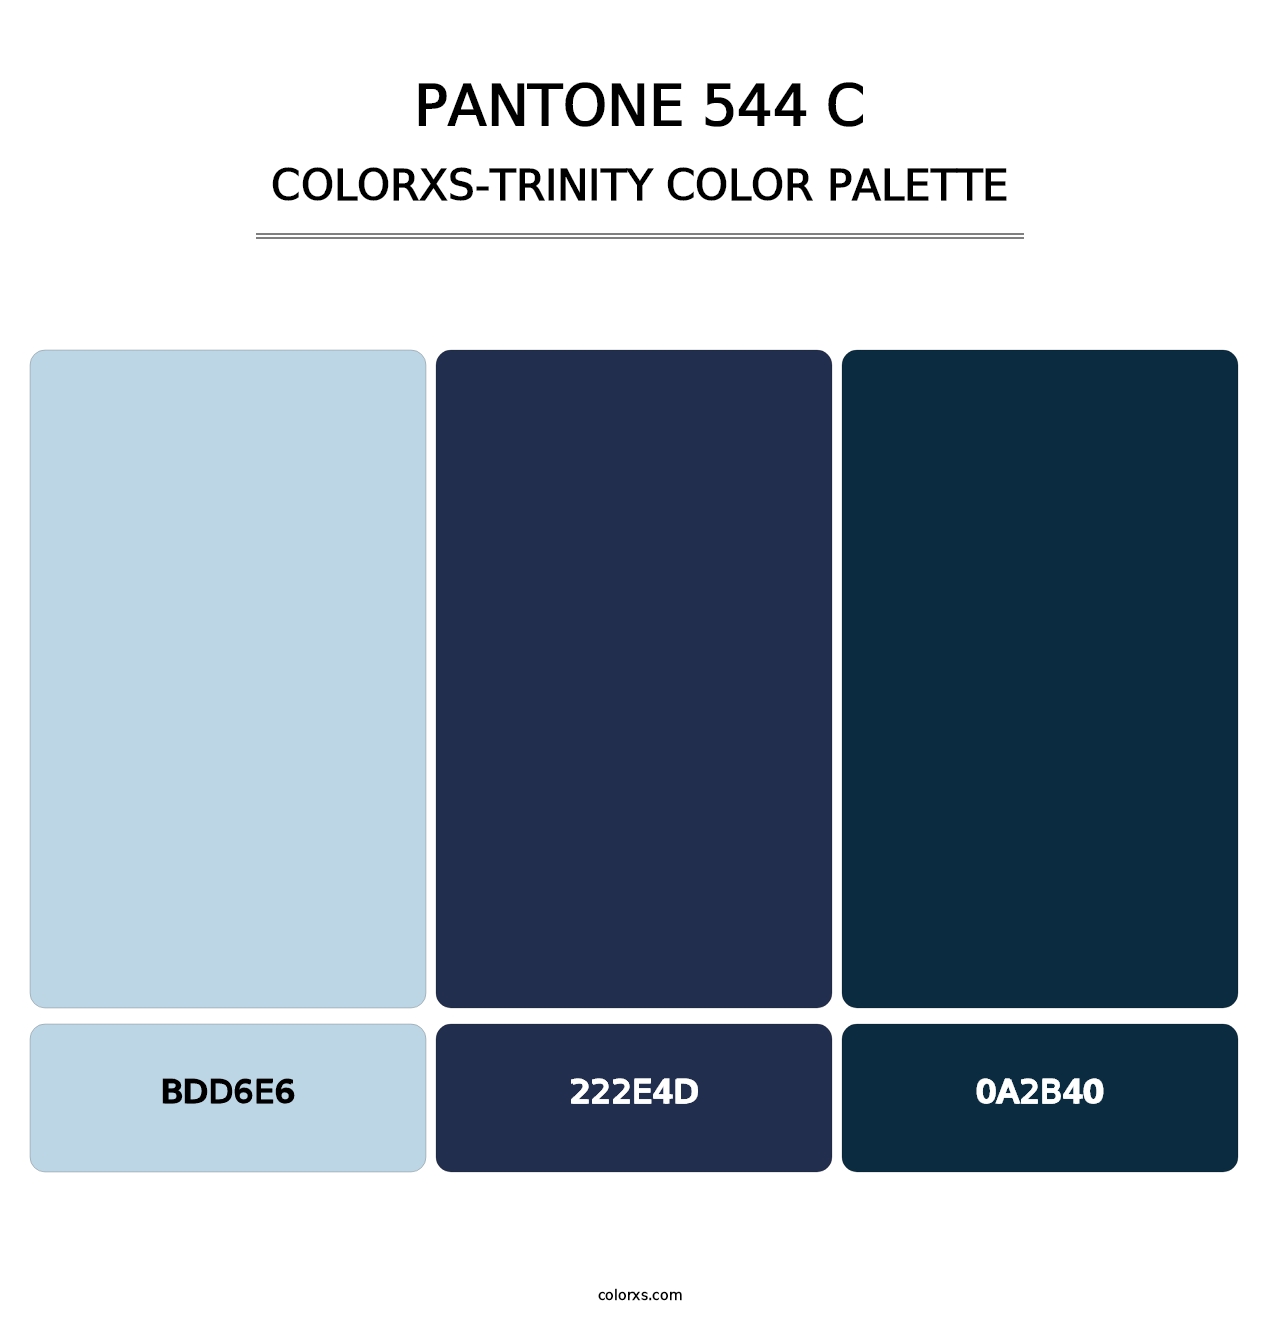 PANTONE 544 C - Colorxs Trinity Palette